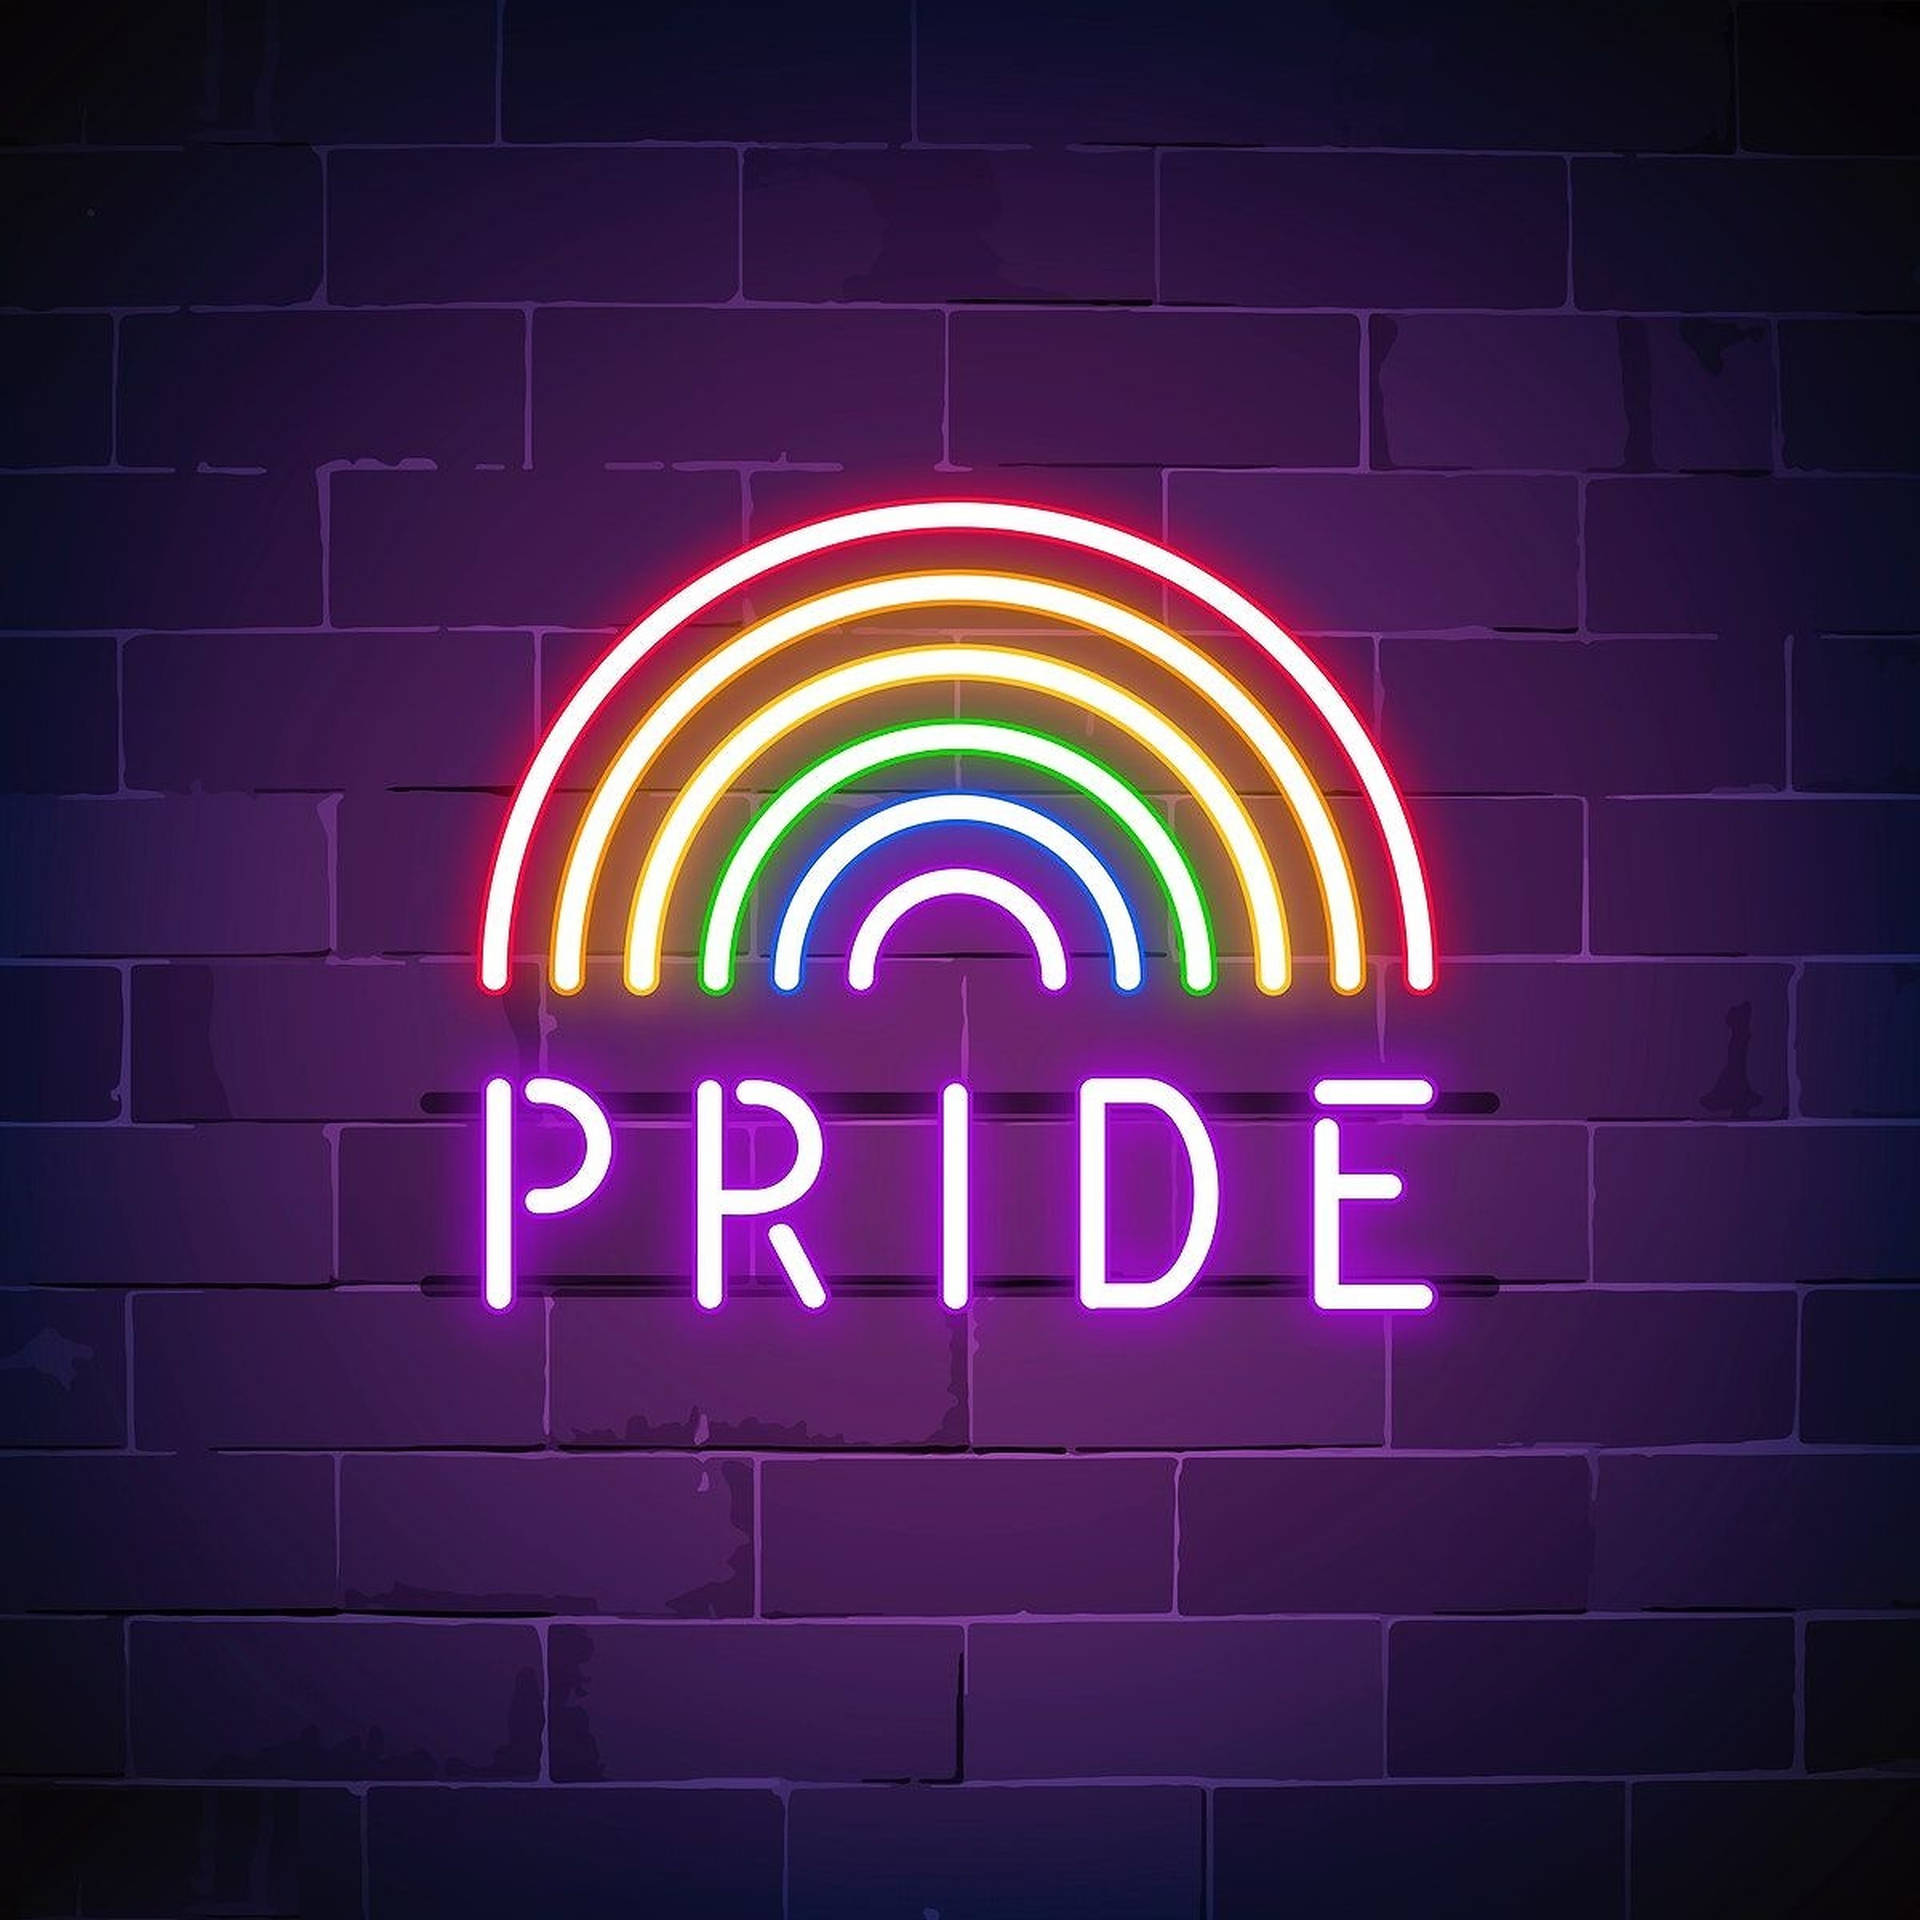 Rainbow Pride Led Light Background